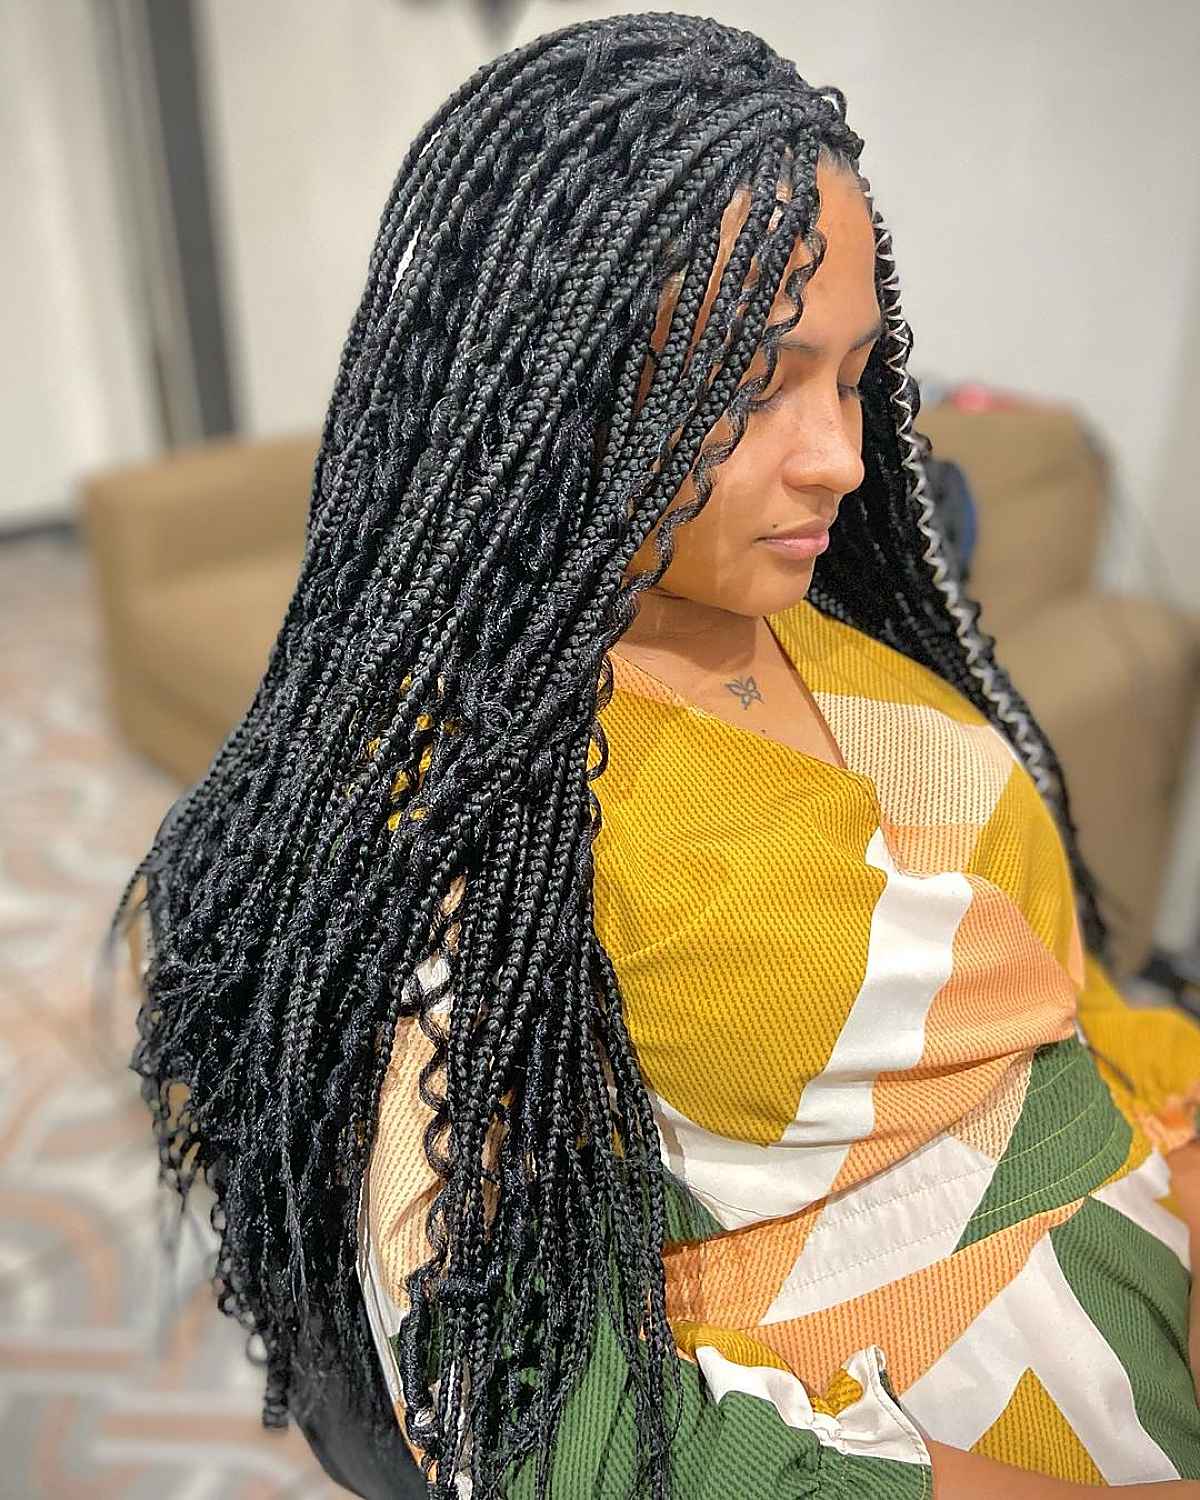 Goddess braids with curls